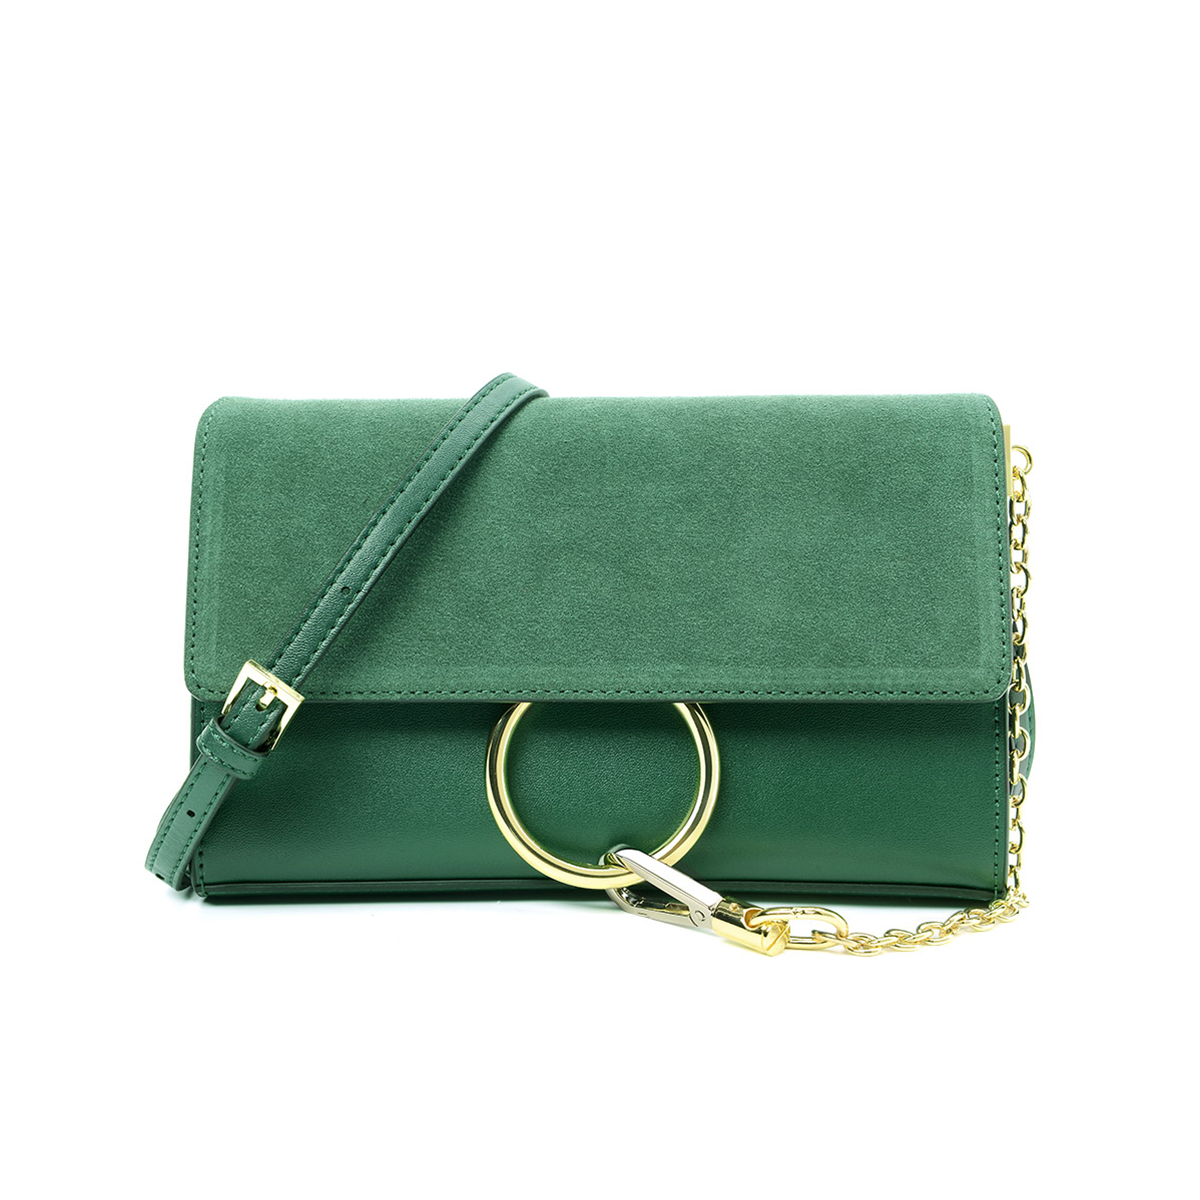 158bag: Square Shoulder Bags Metal Accessories Female Messenger Bags High Quality Handbags 